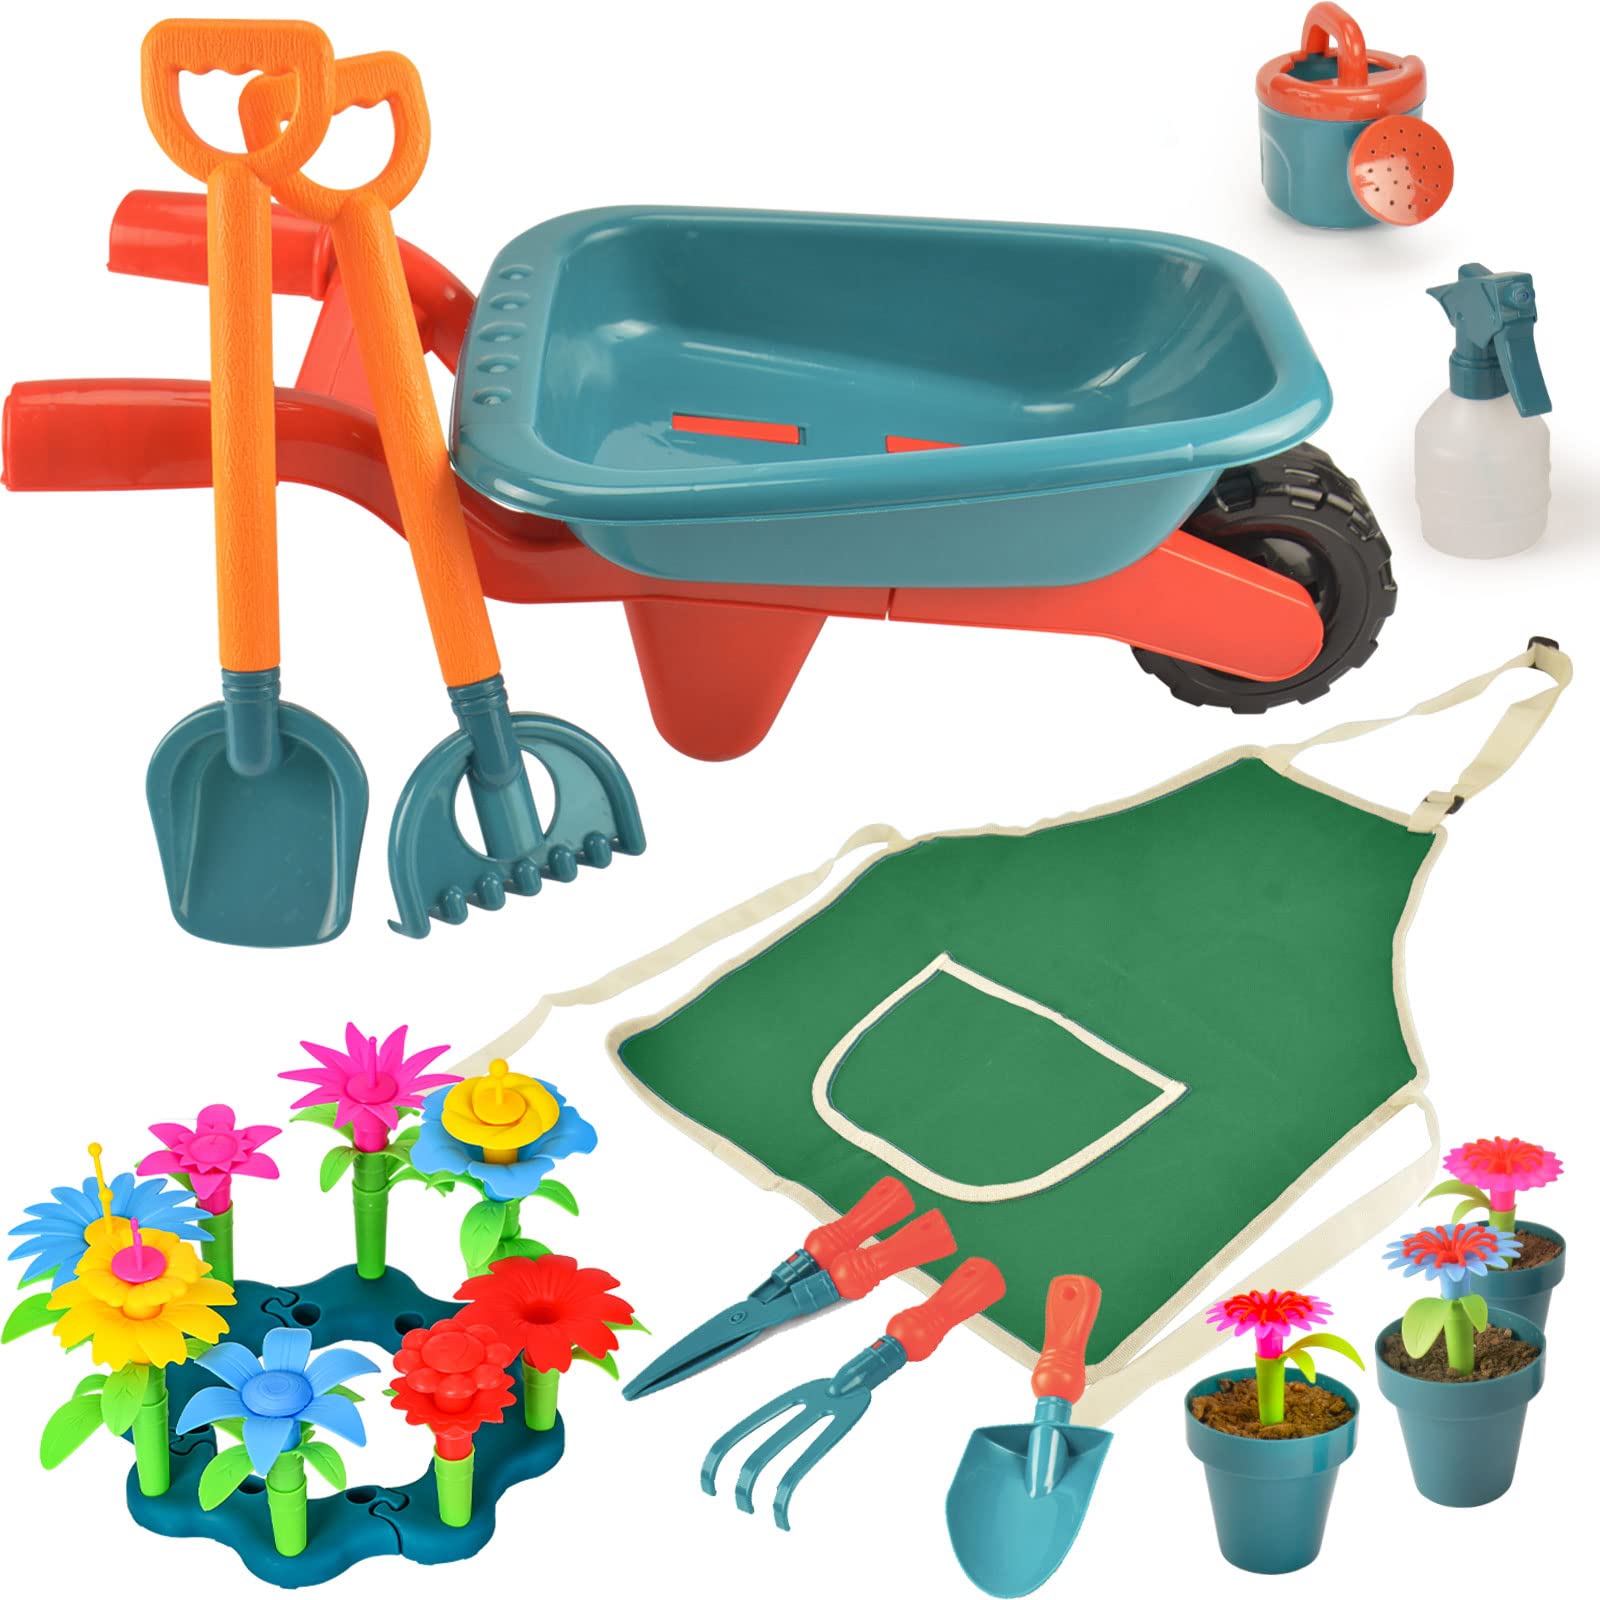 unanscre Gardening Tool Set for Kids